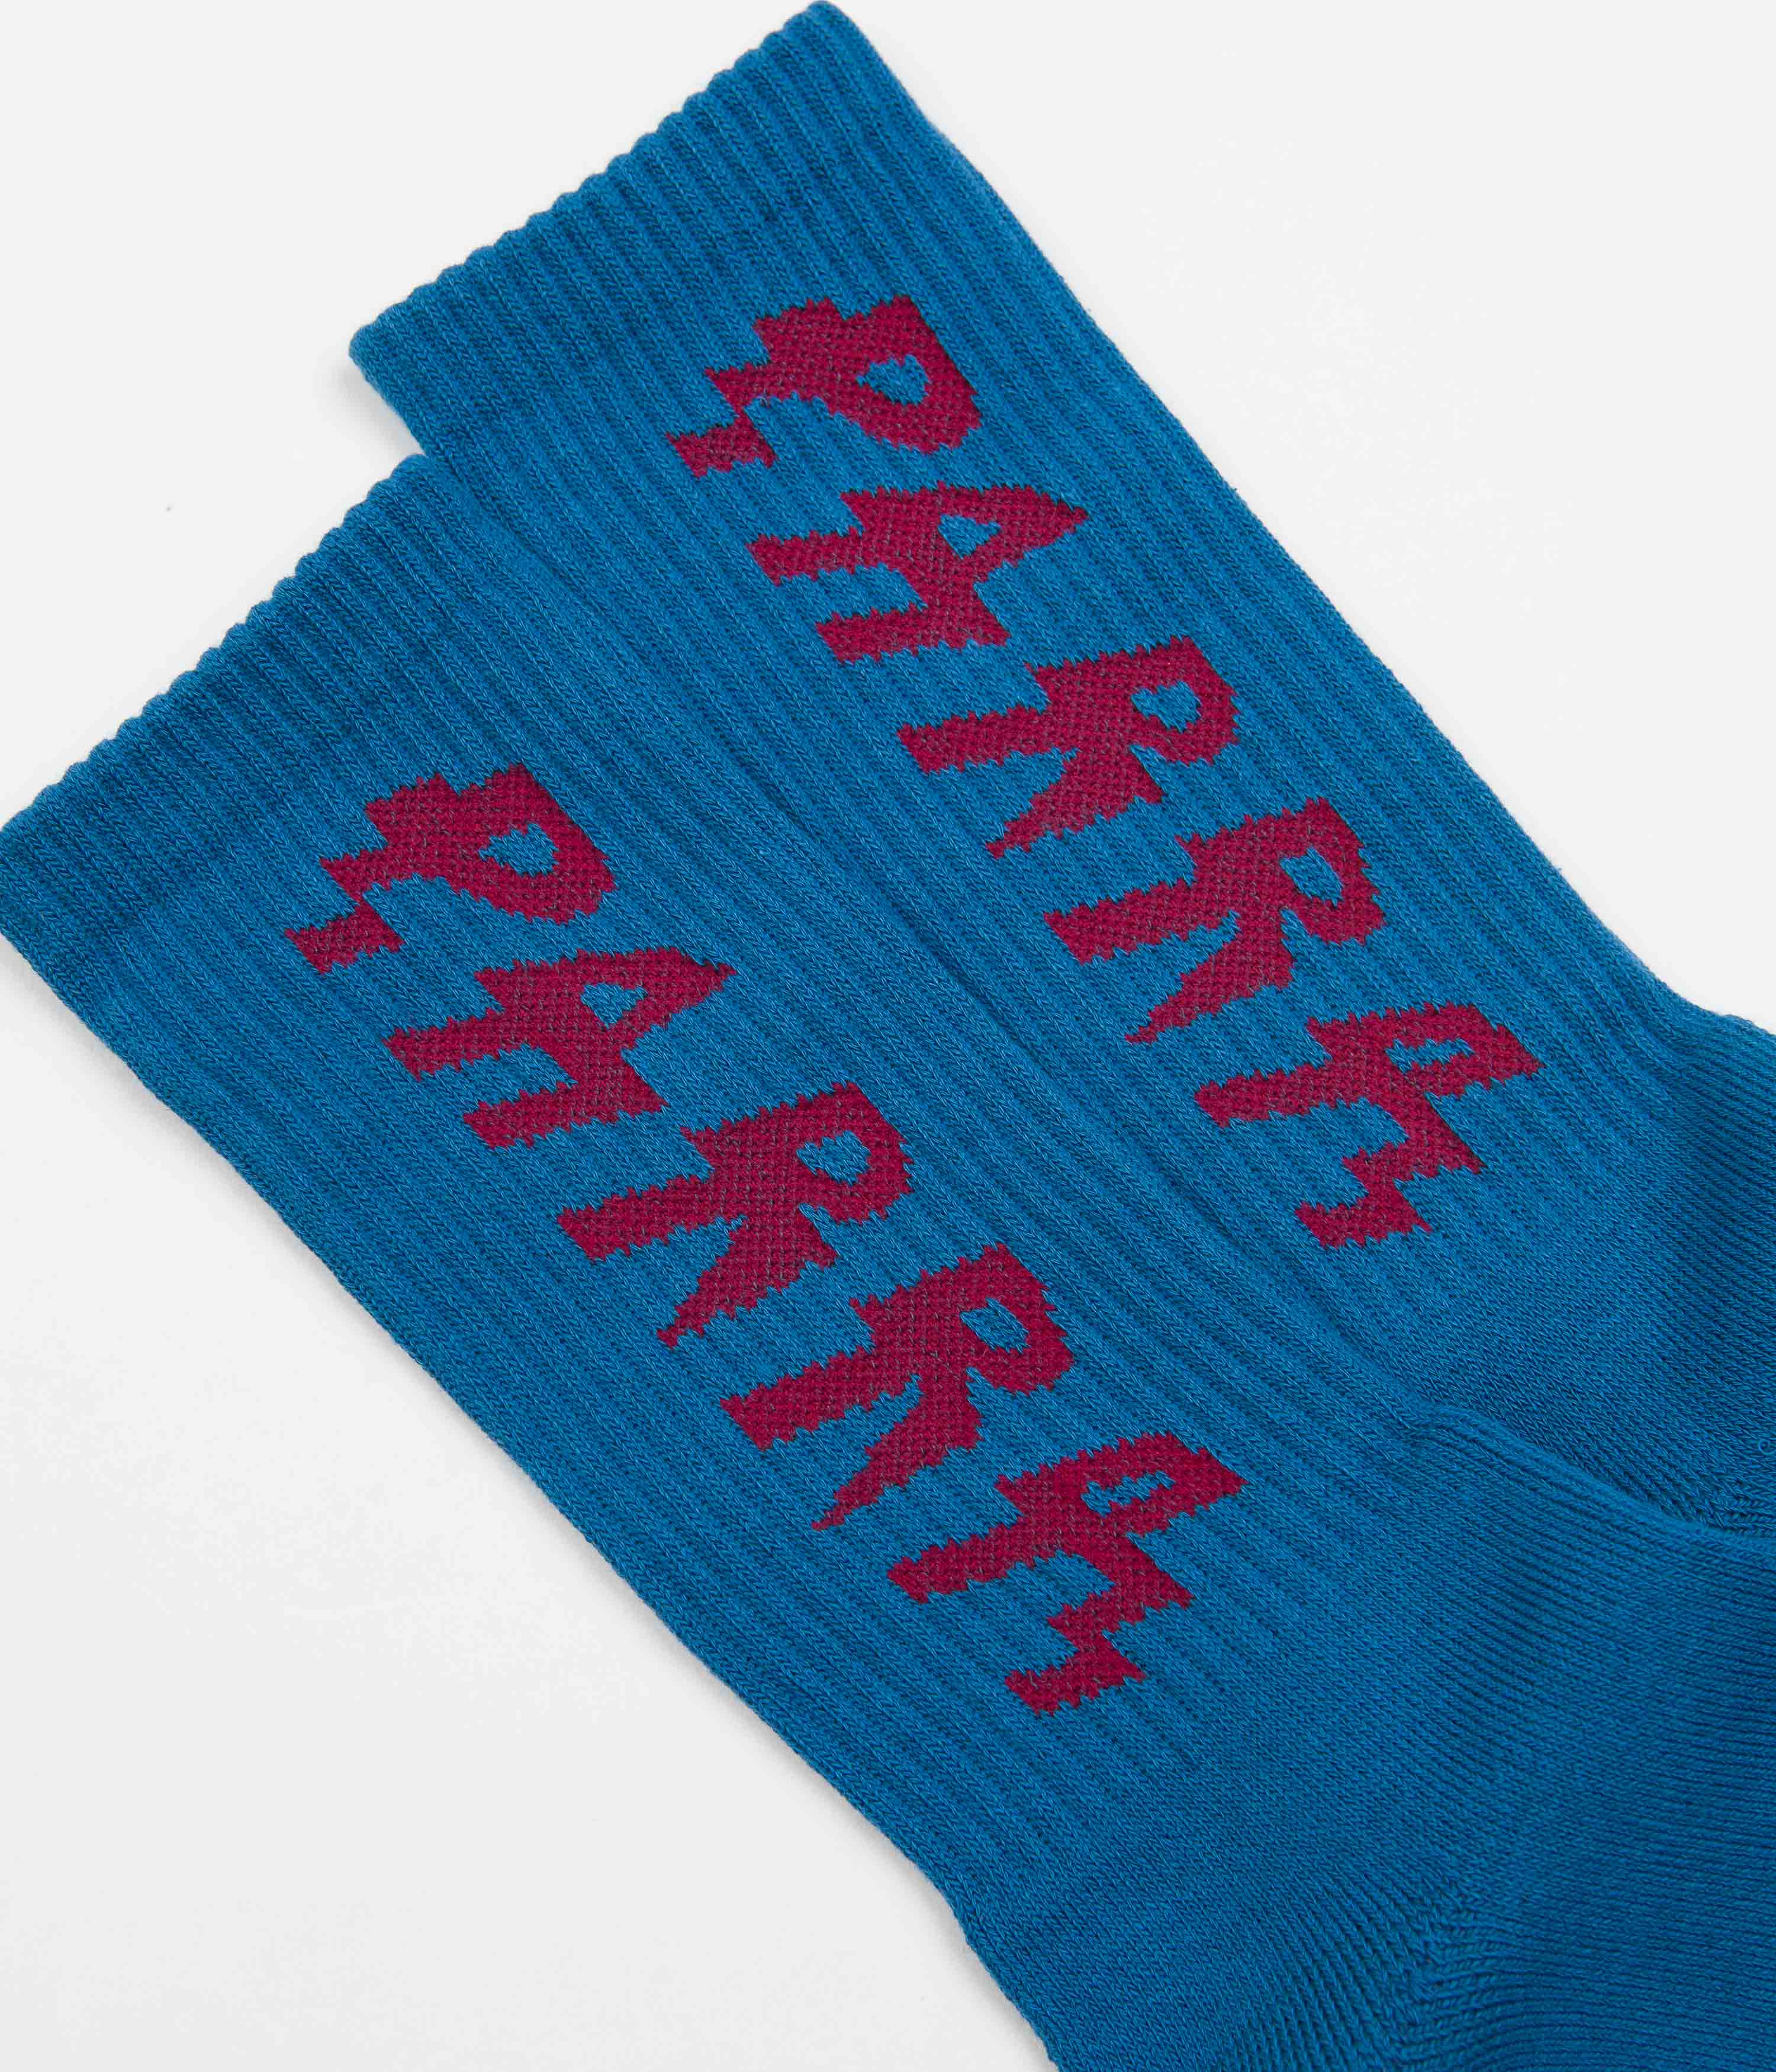 by Parra Shocker Logo Crew Socks - Greek Blue | Flatspot